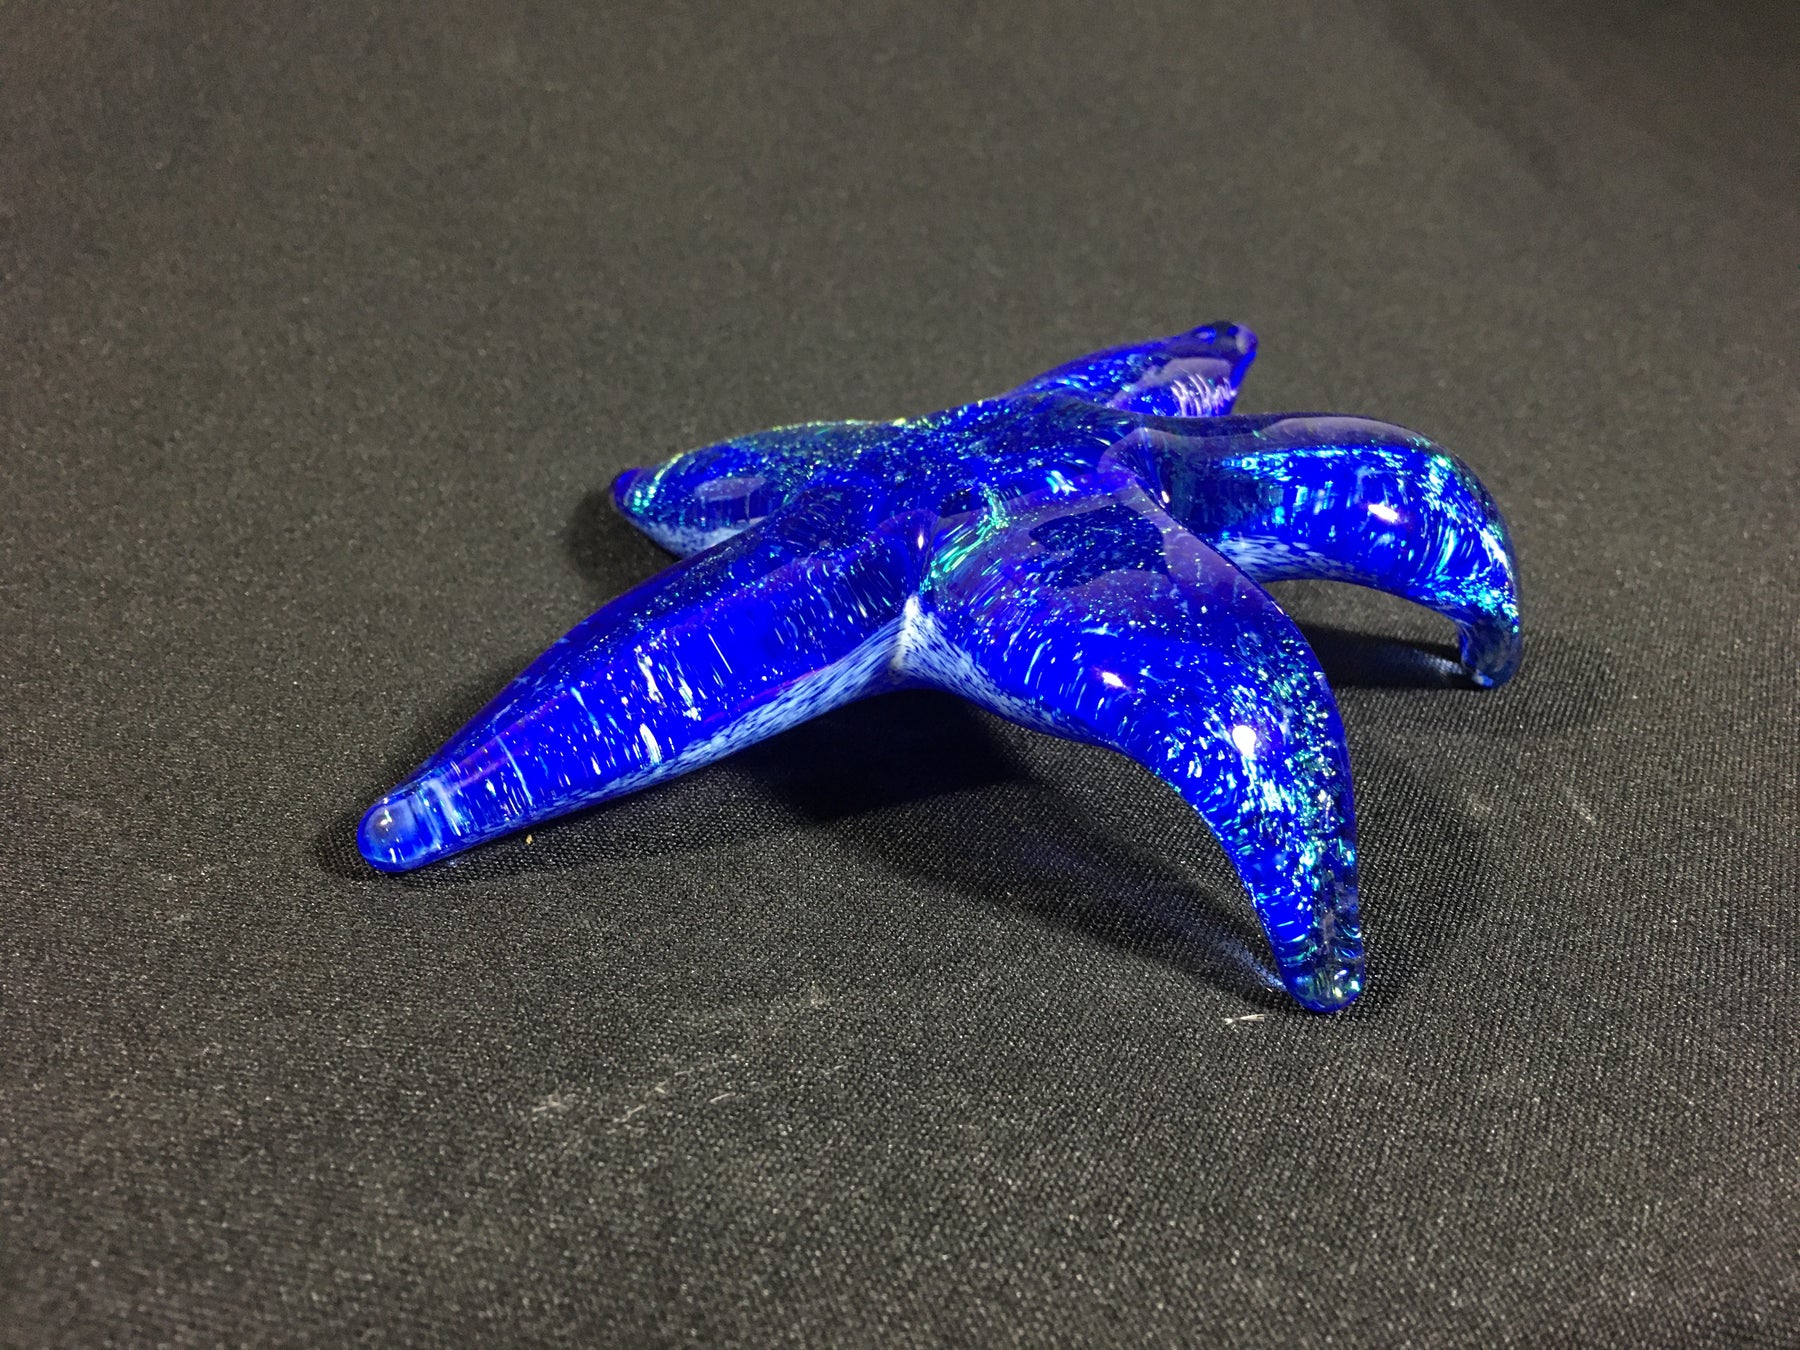 4 Point Star Glitter - Iridescent Caribbean Blue